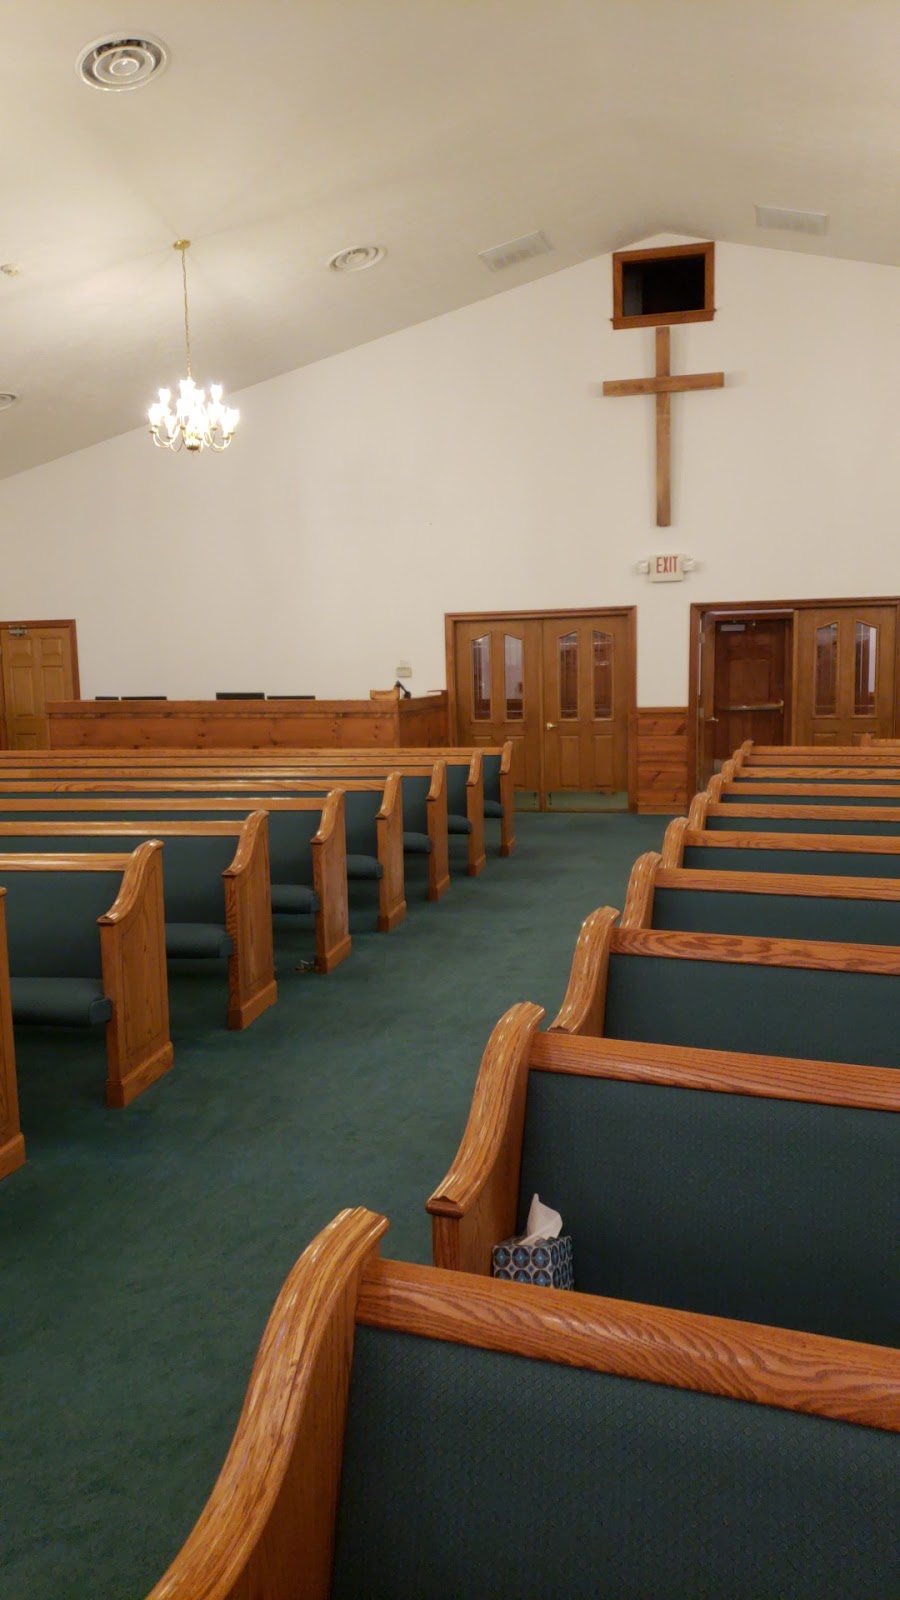 Oak Hall Baptist Church | 1877 Old Hanover Rd, Sandston, VA 23150, USA | Phone: (804) 737-5812